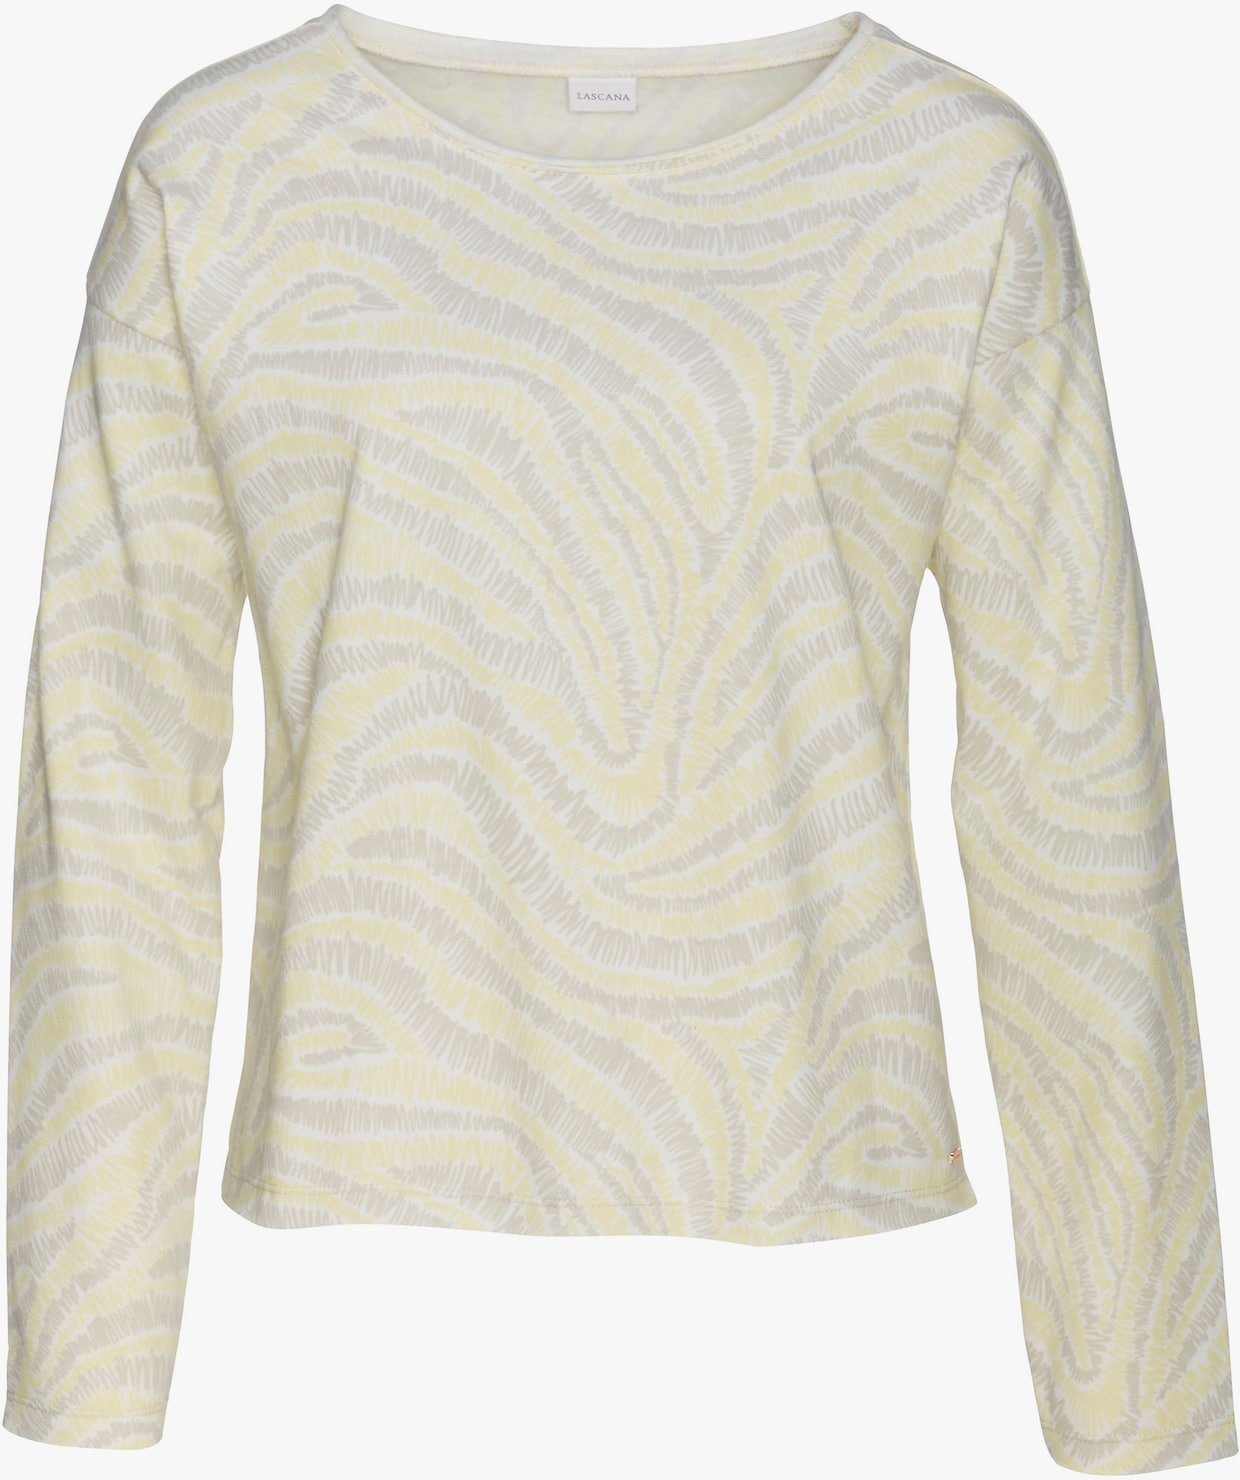 LASCANA Sweat-shirt - jaune clair-gris clair à motifs